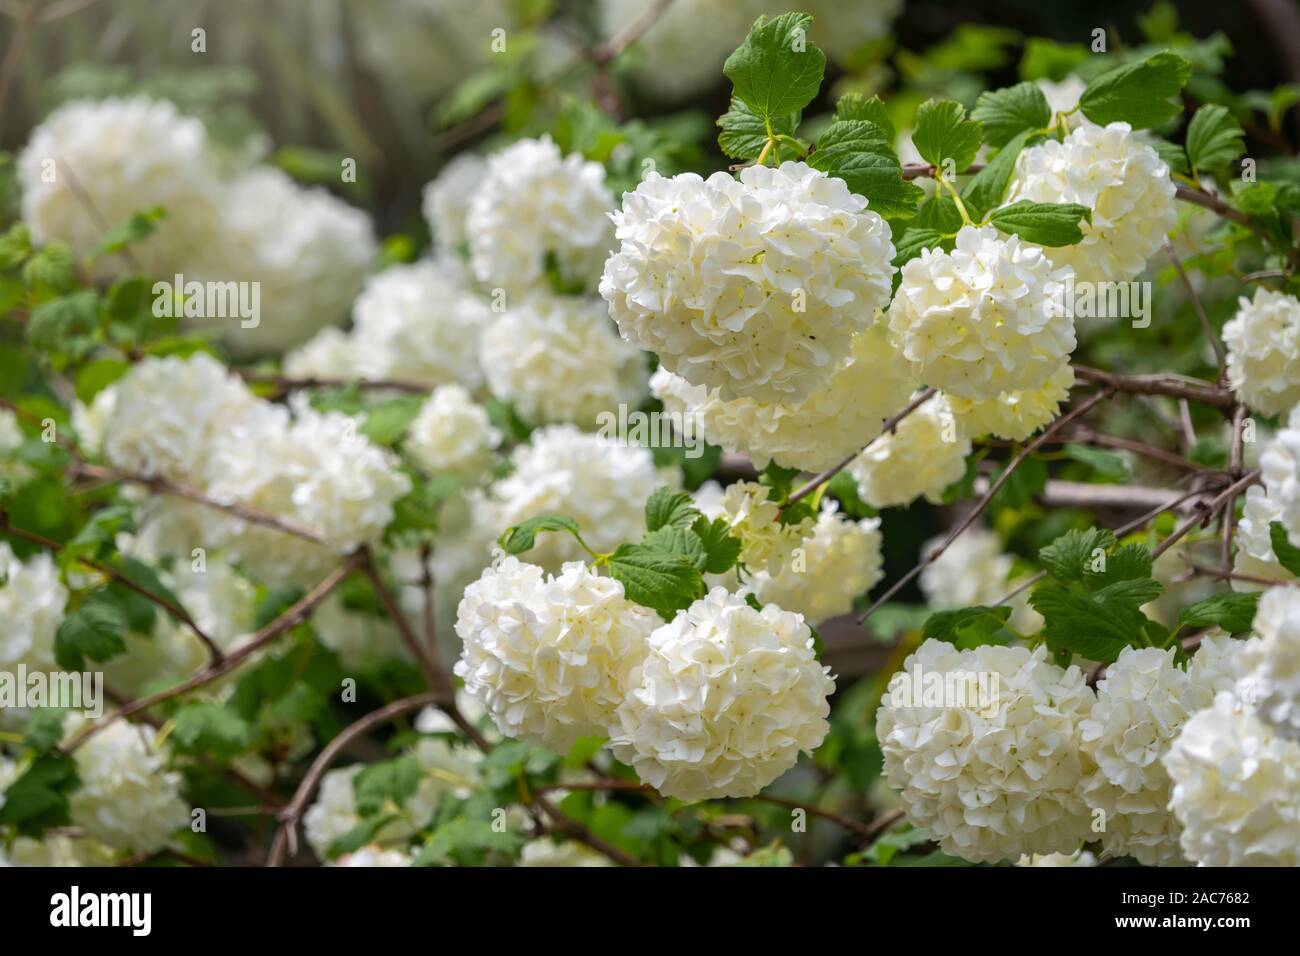 Lush white flowers of viburnum roseum. White flowers with blurred background. Stock Photo